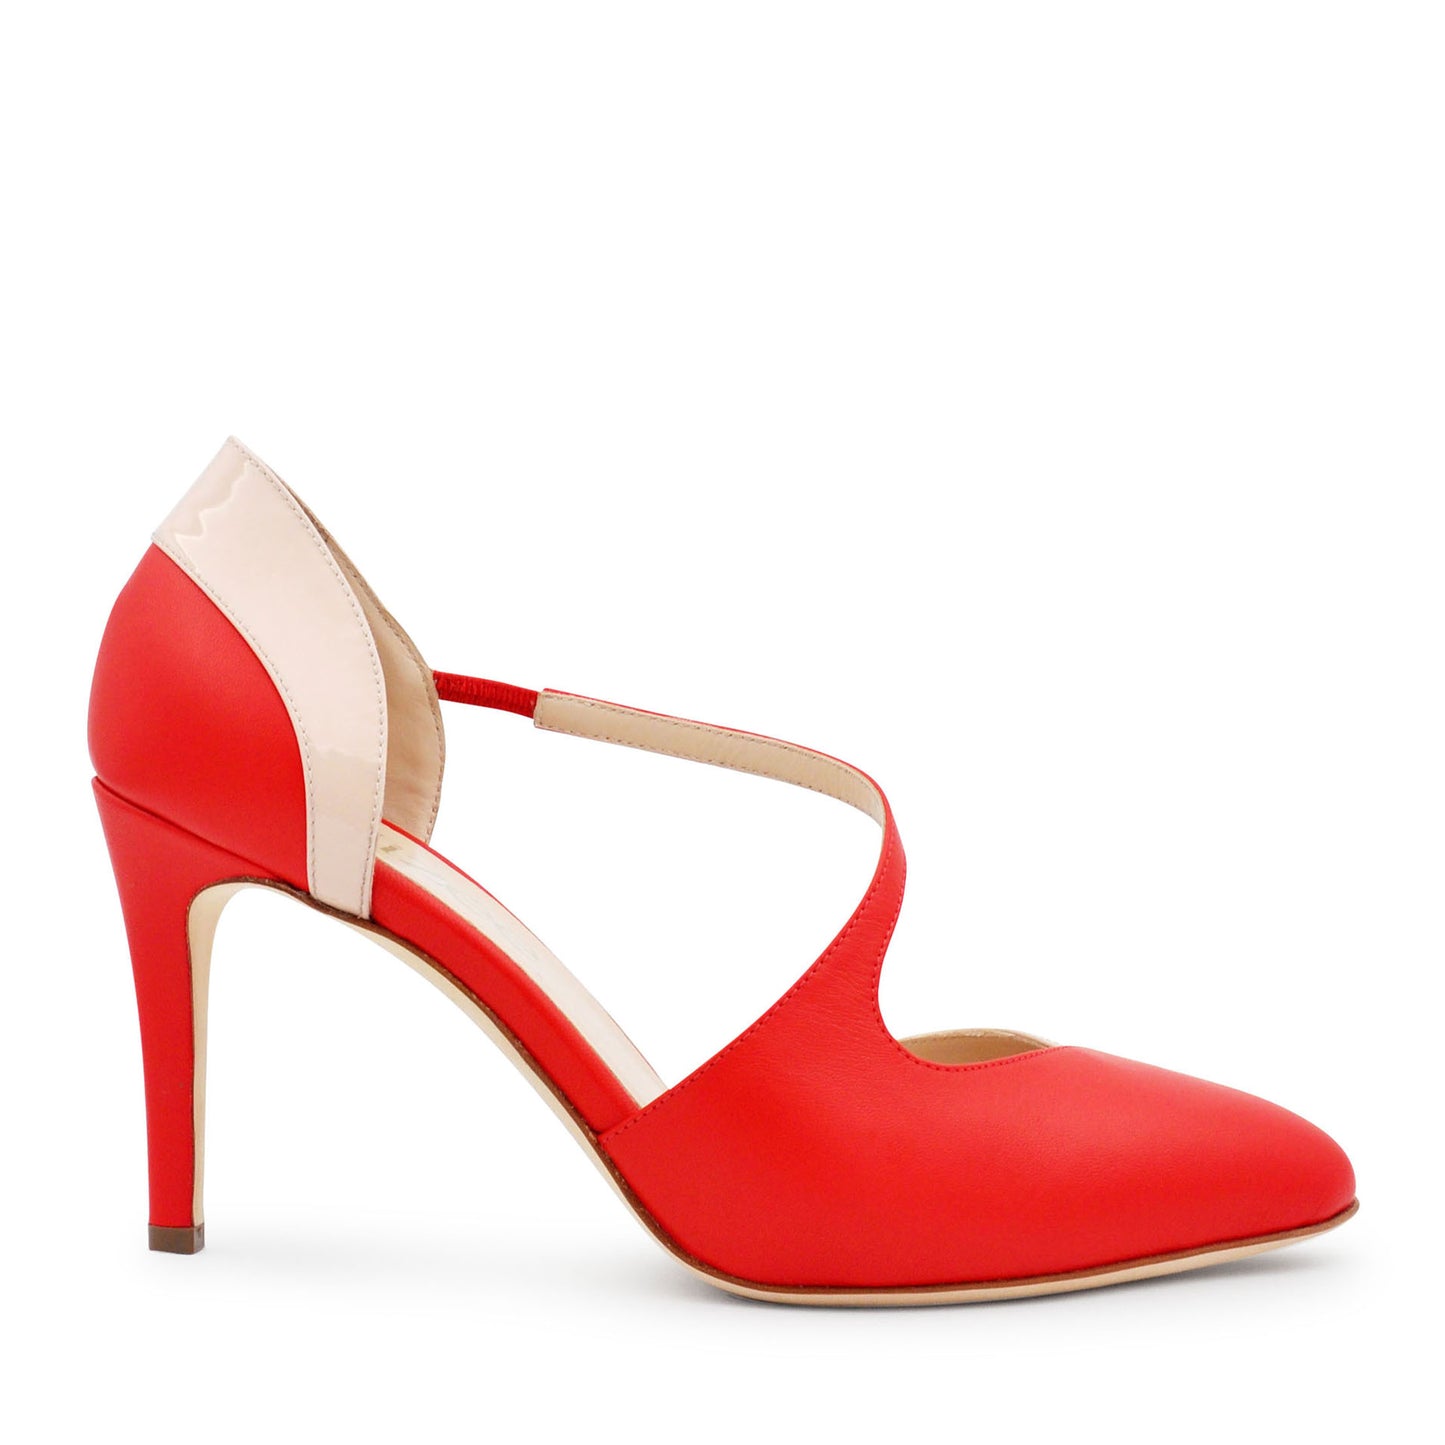 The Elba Pump - Crimson and Blush Leather High Heels